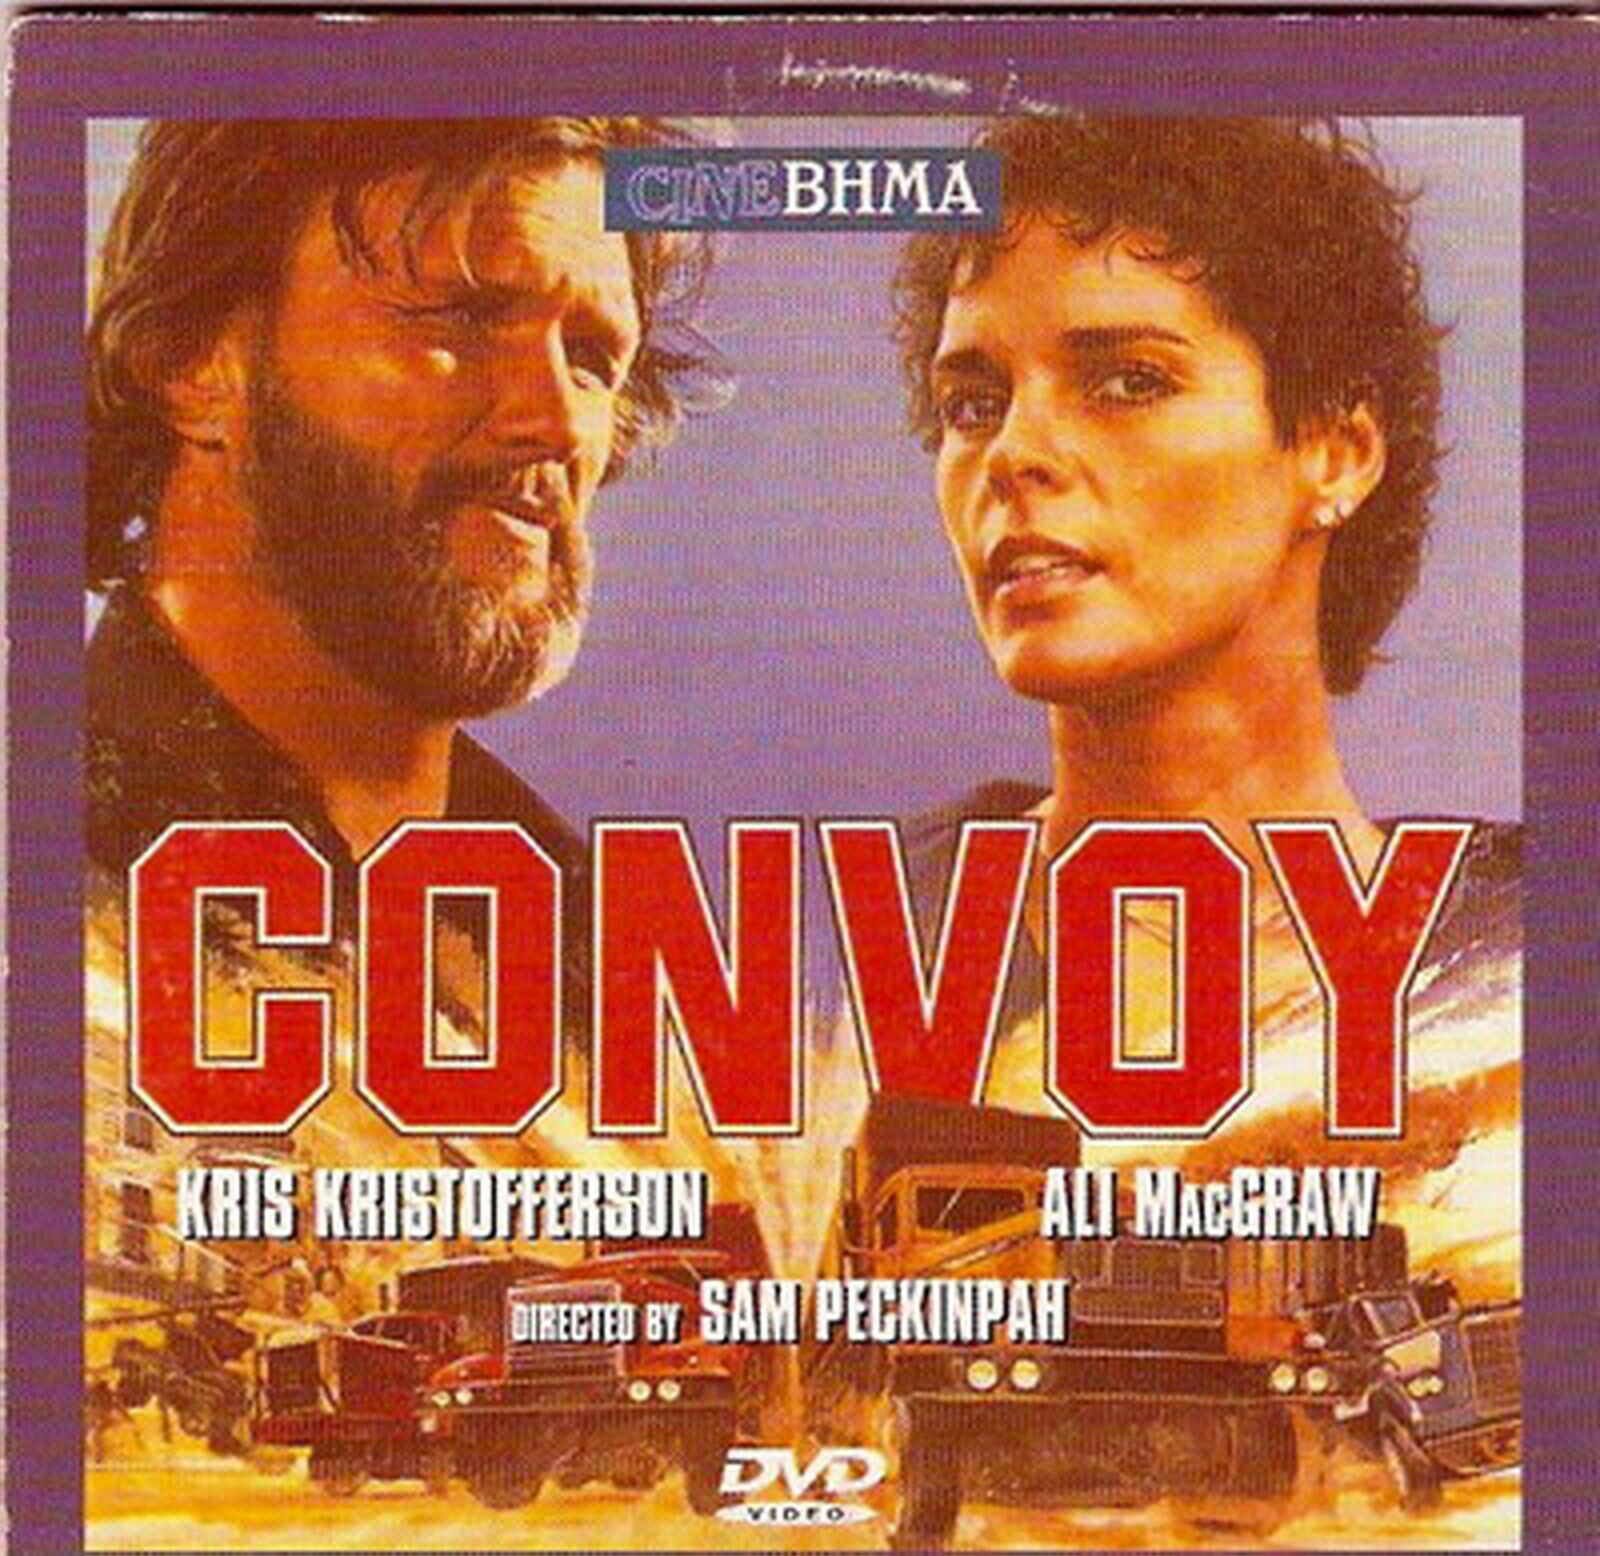 CONVOY (1978) Kris Kristofferson Ali MacGraw Ernest Borgnine Burt Young ...